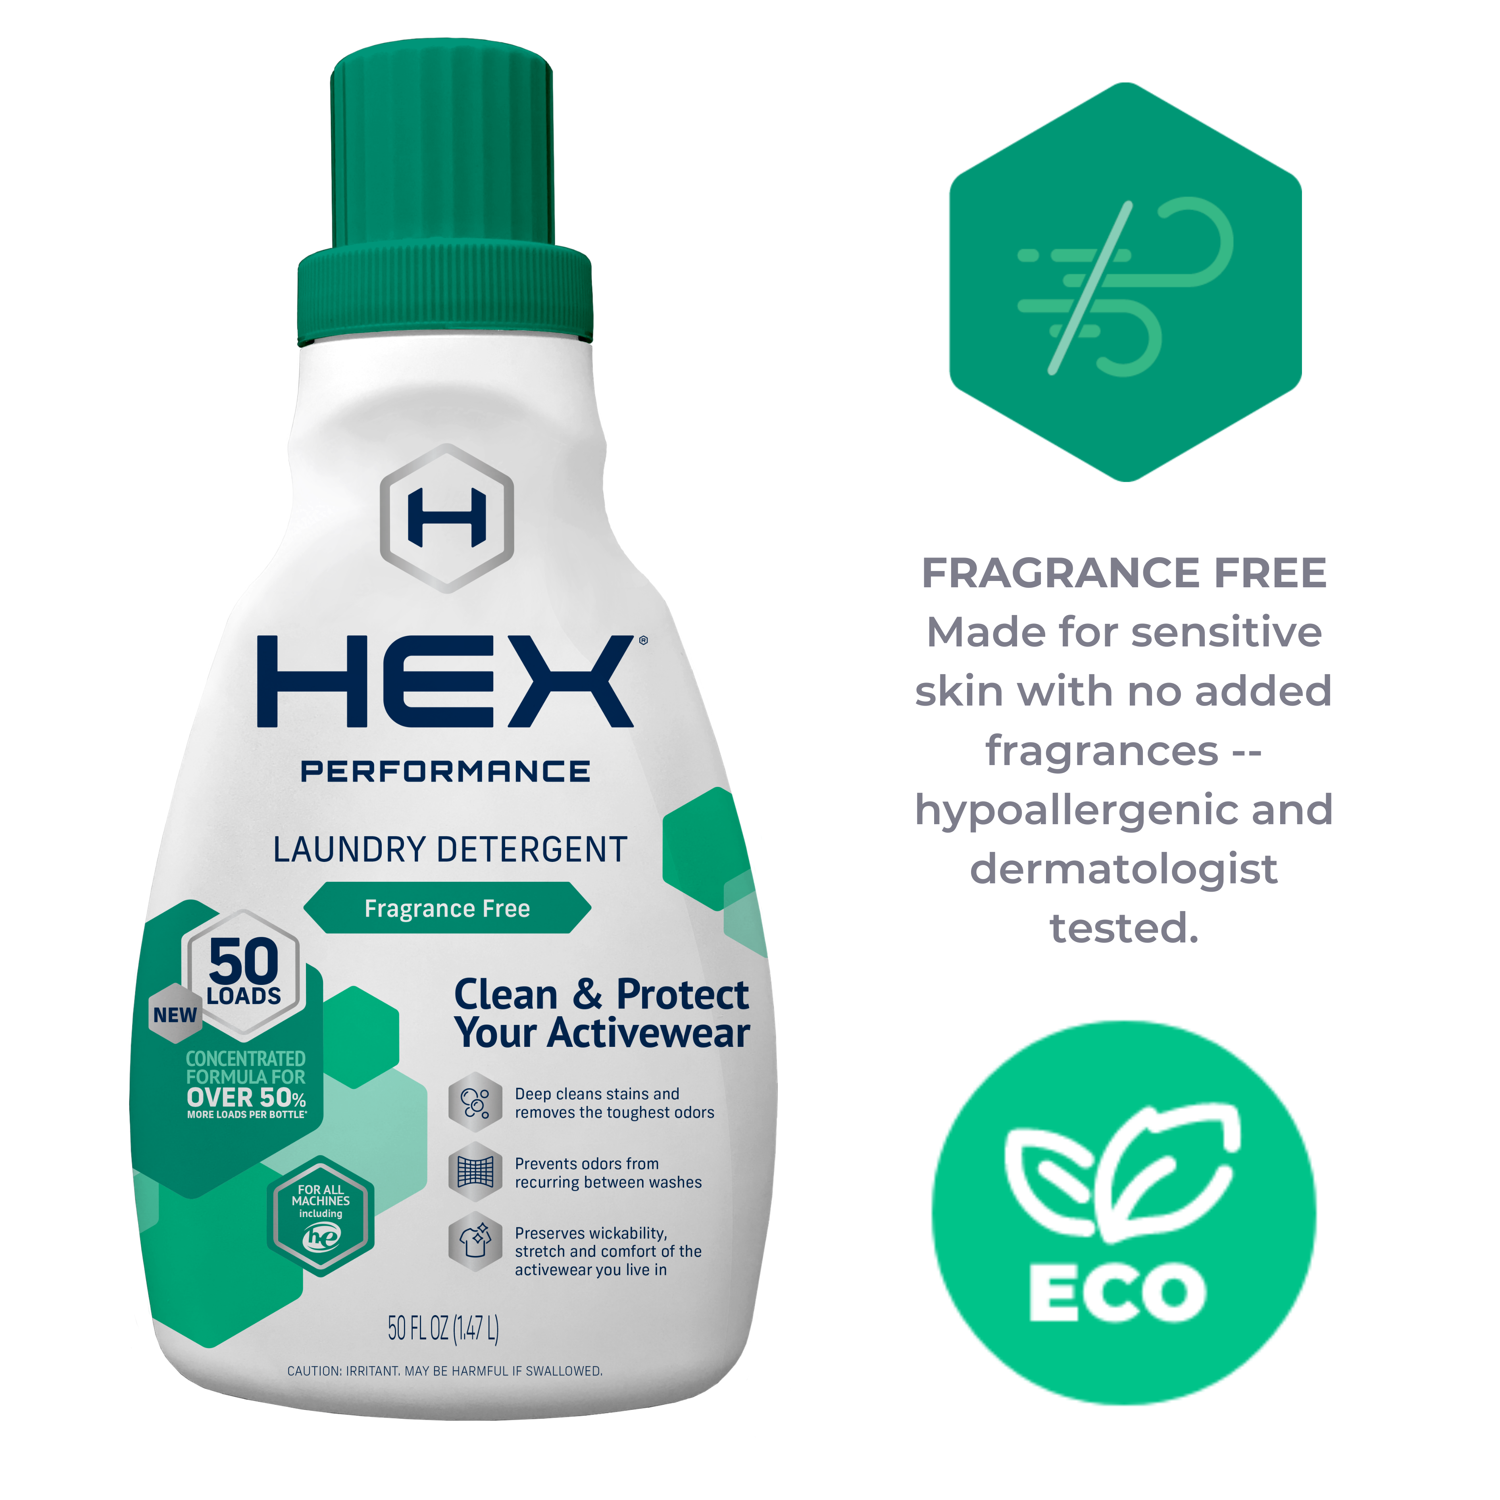 HEX Performance Fragrance Free Detergent, 50 Loads - image 4 of 6